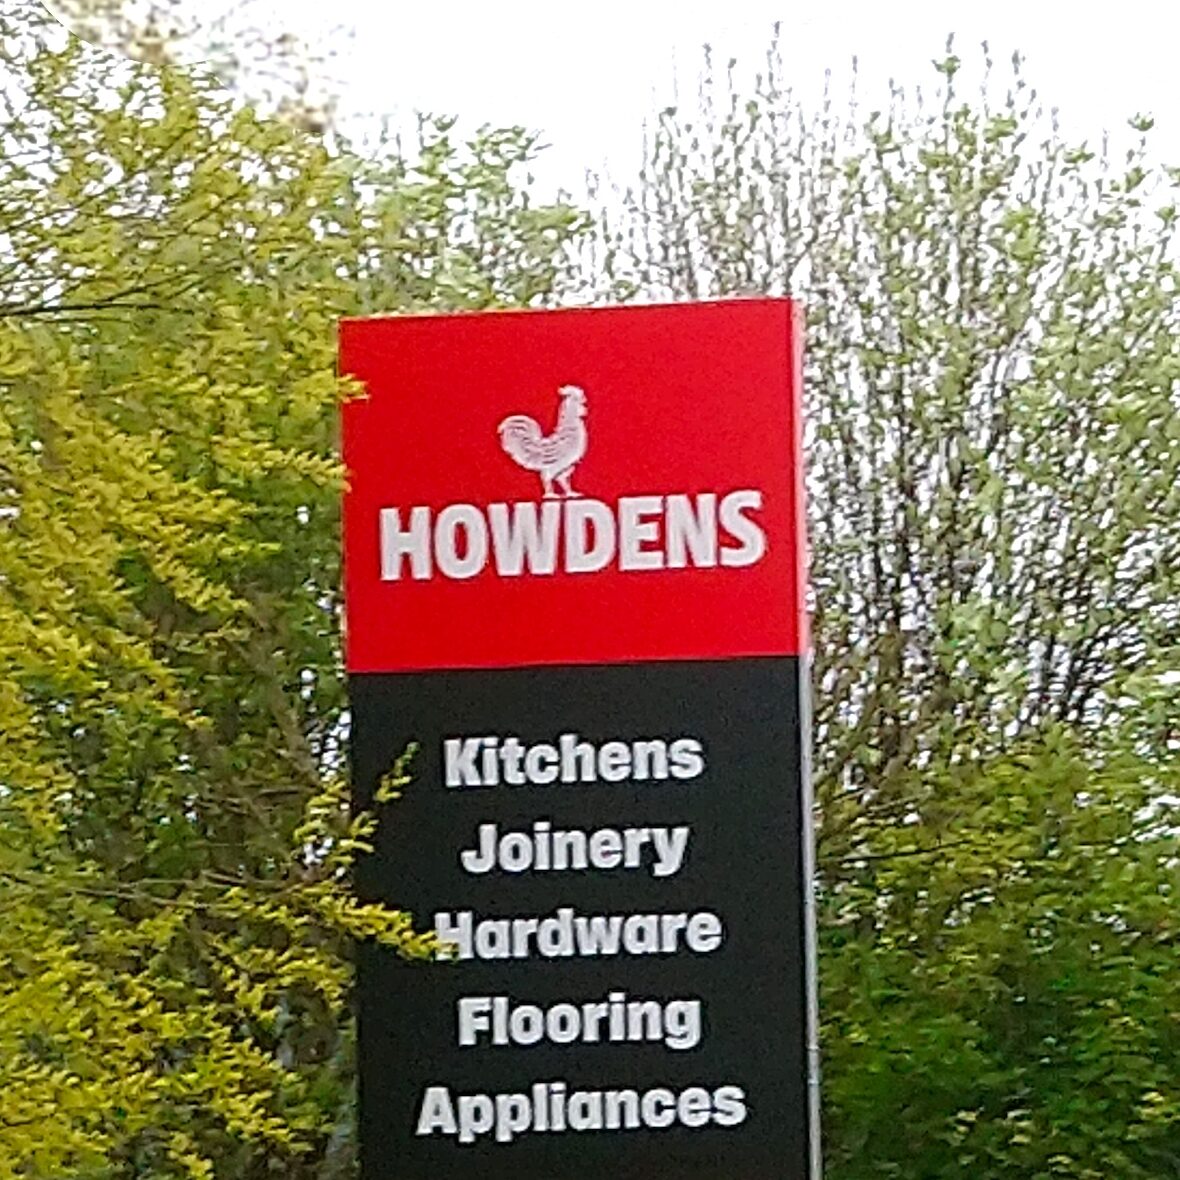 Howden Joinery Ltd